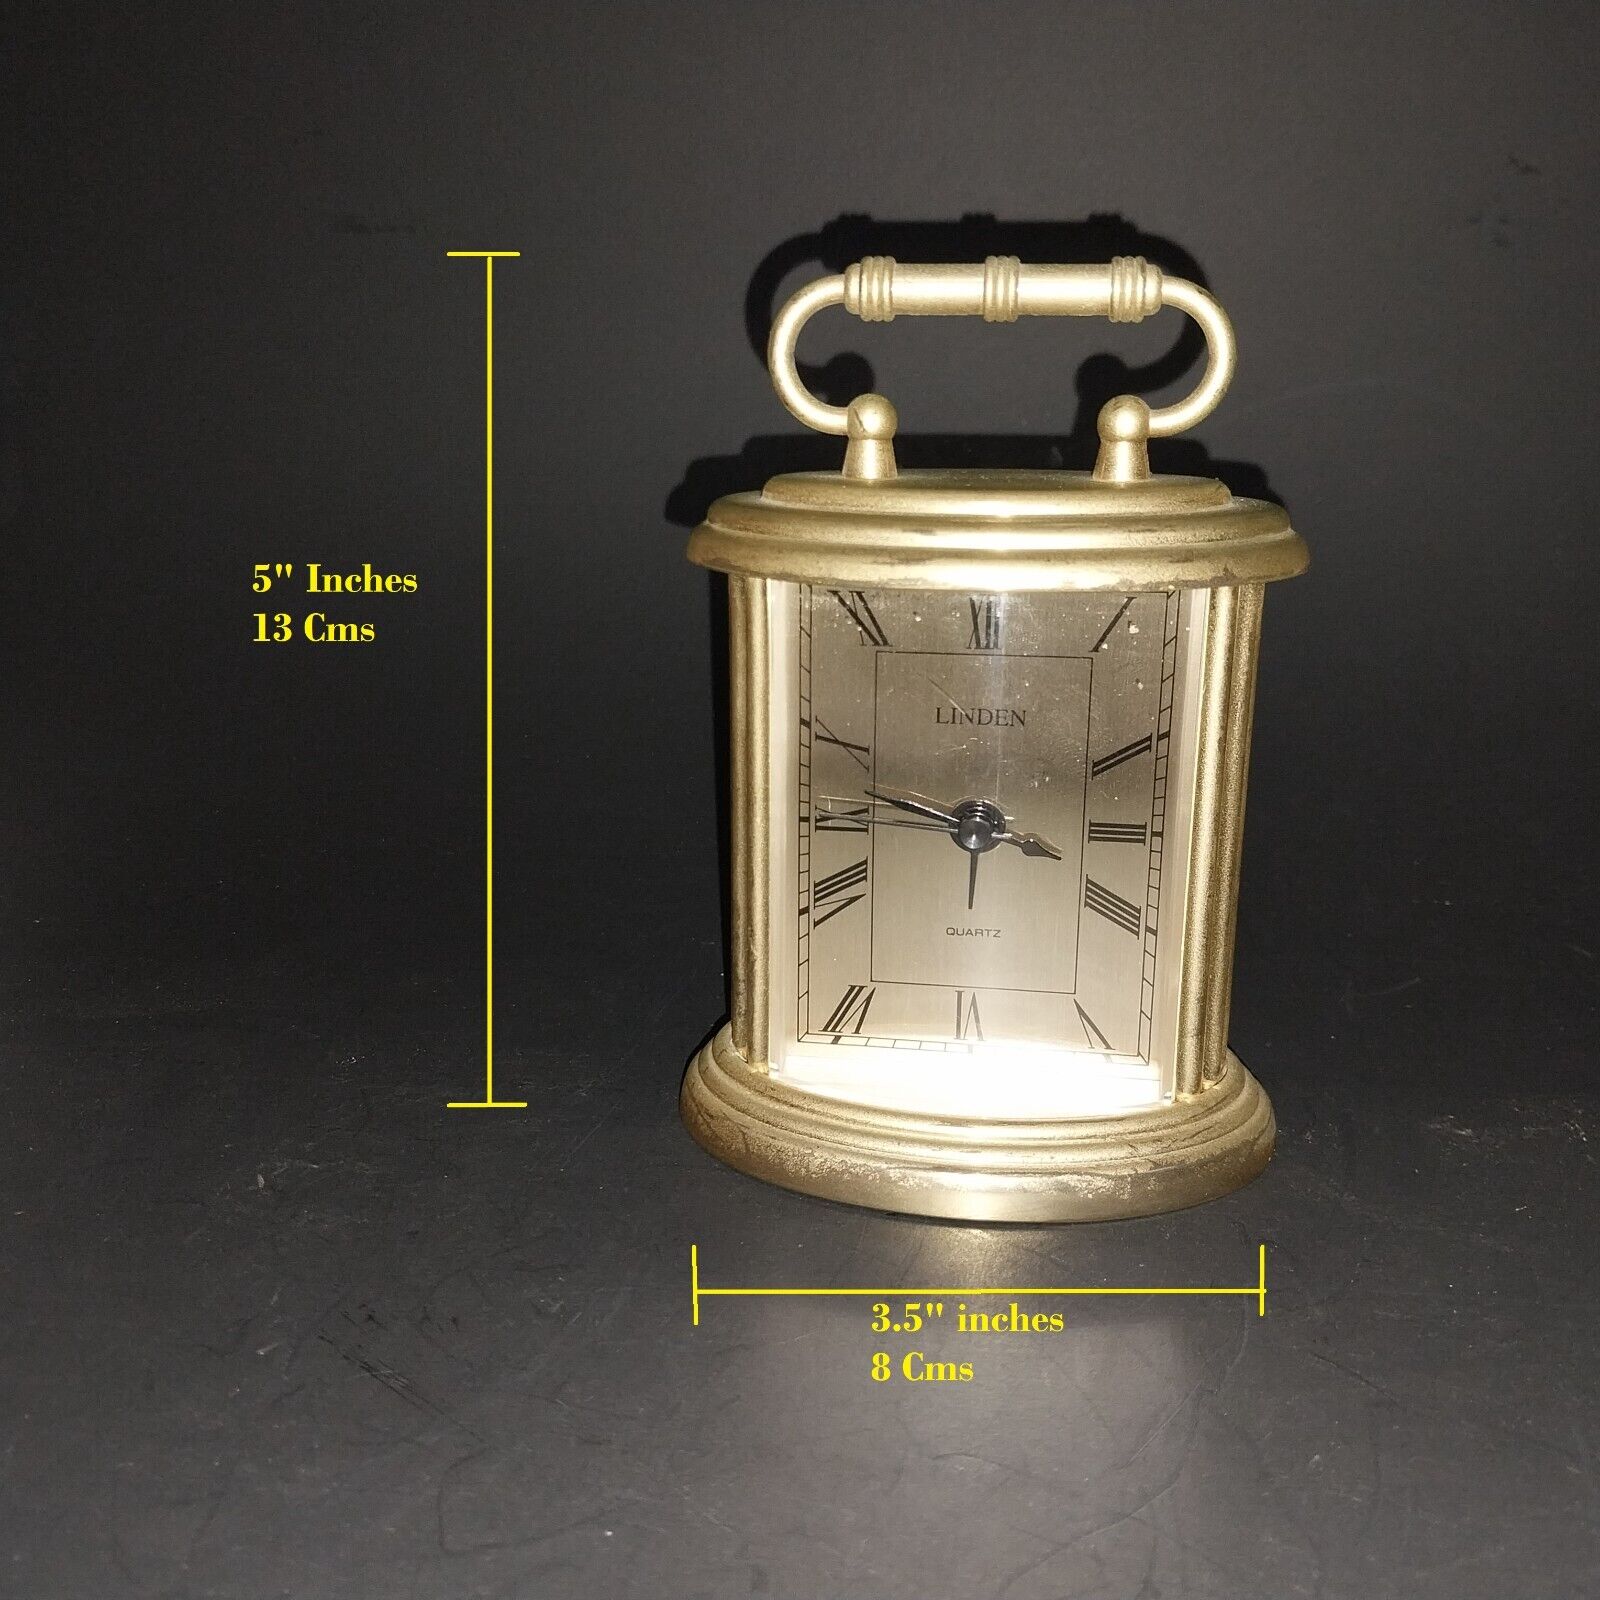  Vintage Linden Brass Glass Office Desk Clock with alarm